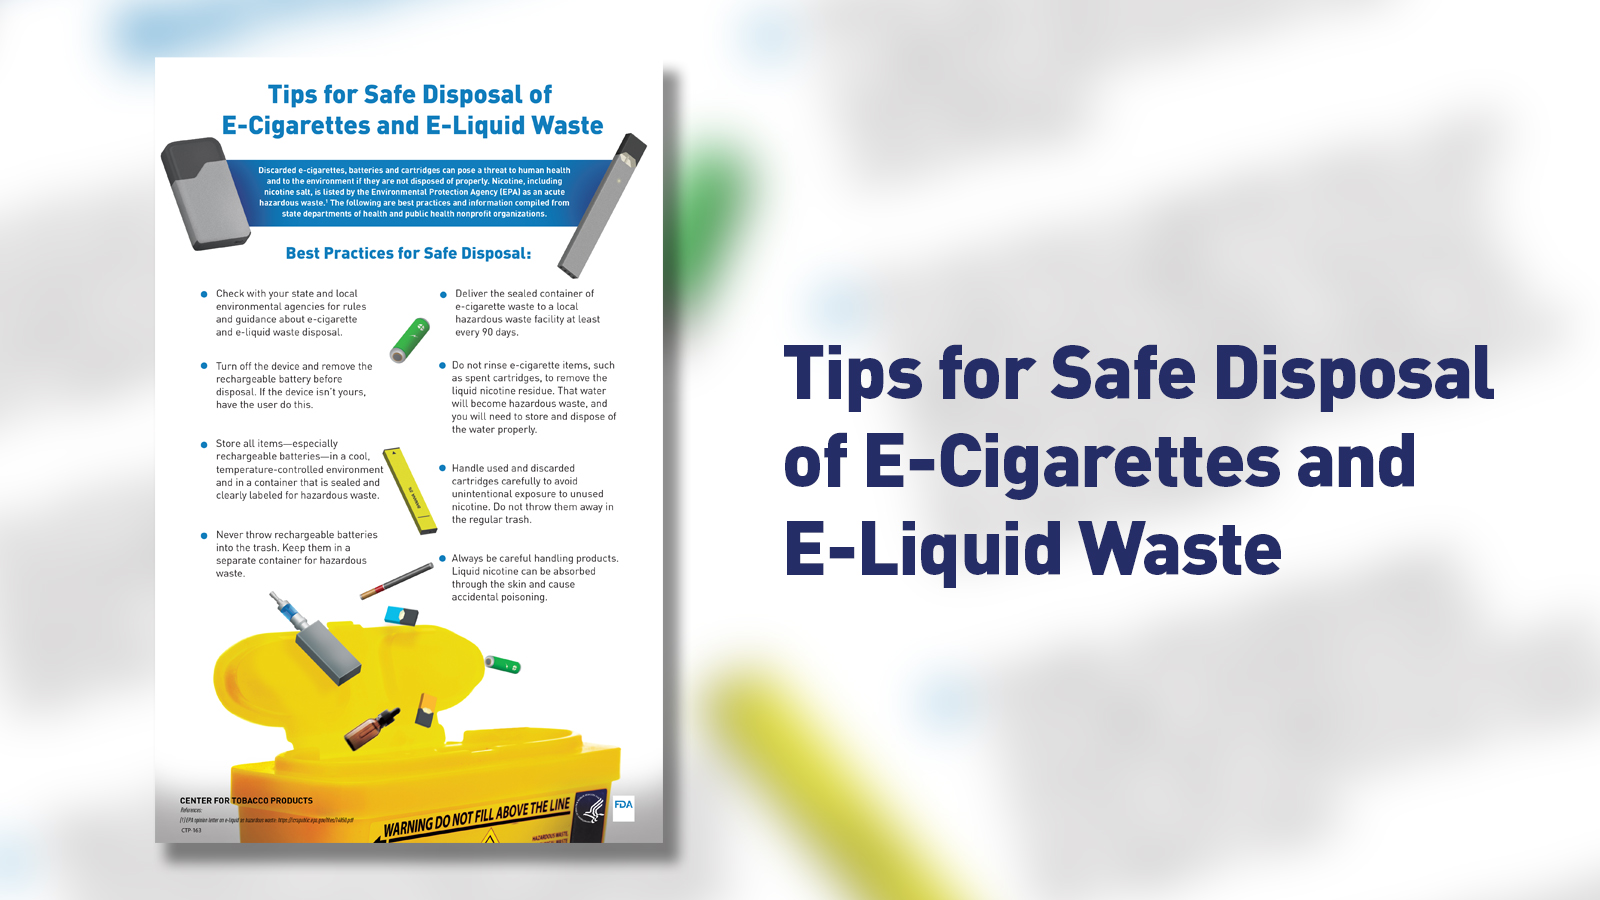 Tips for Safe Disposal of E-Cigarettes and E-Liquid Waste